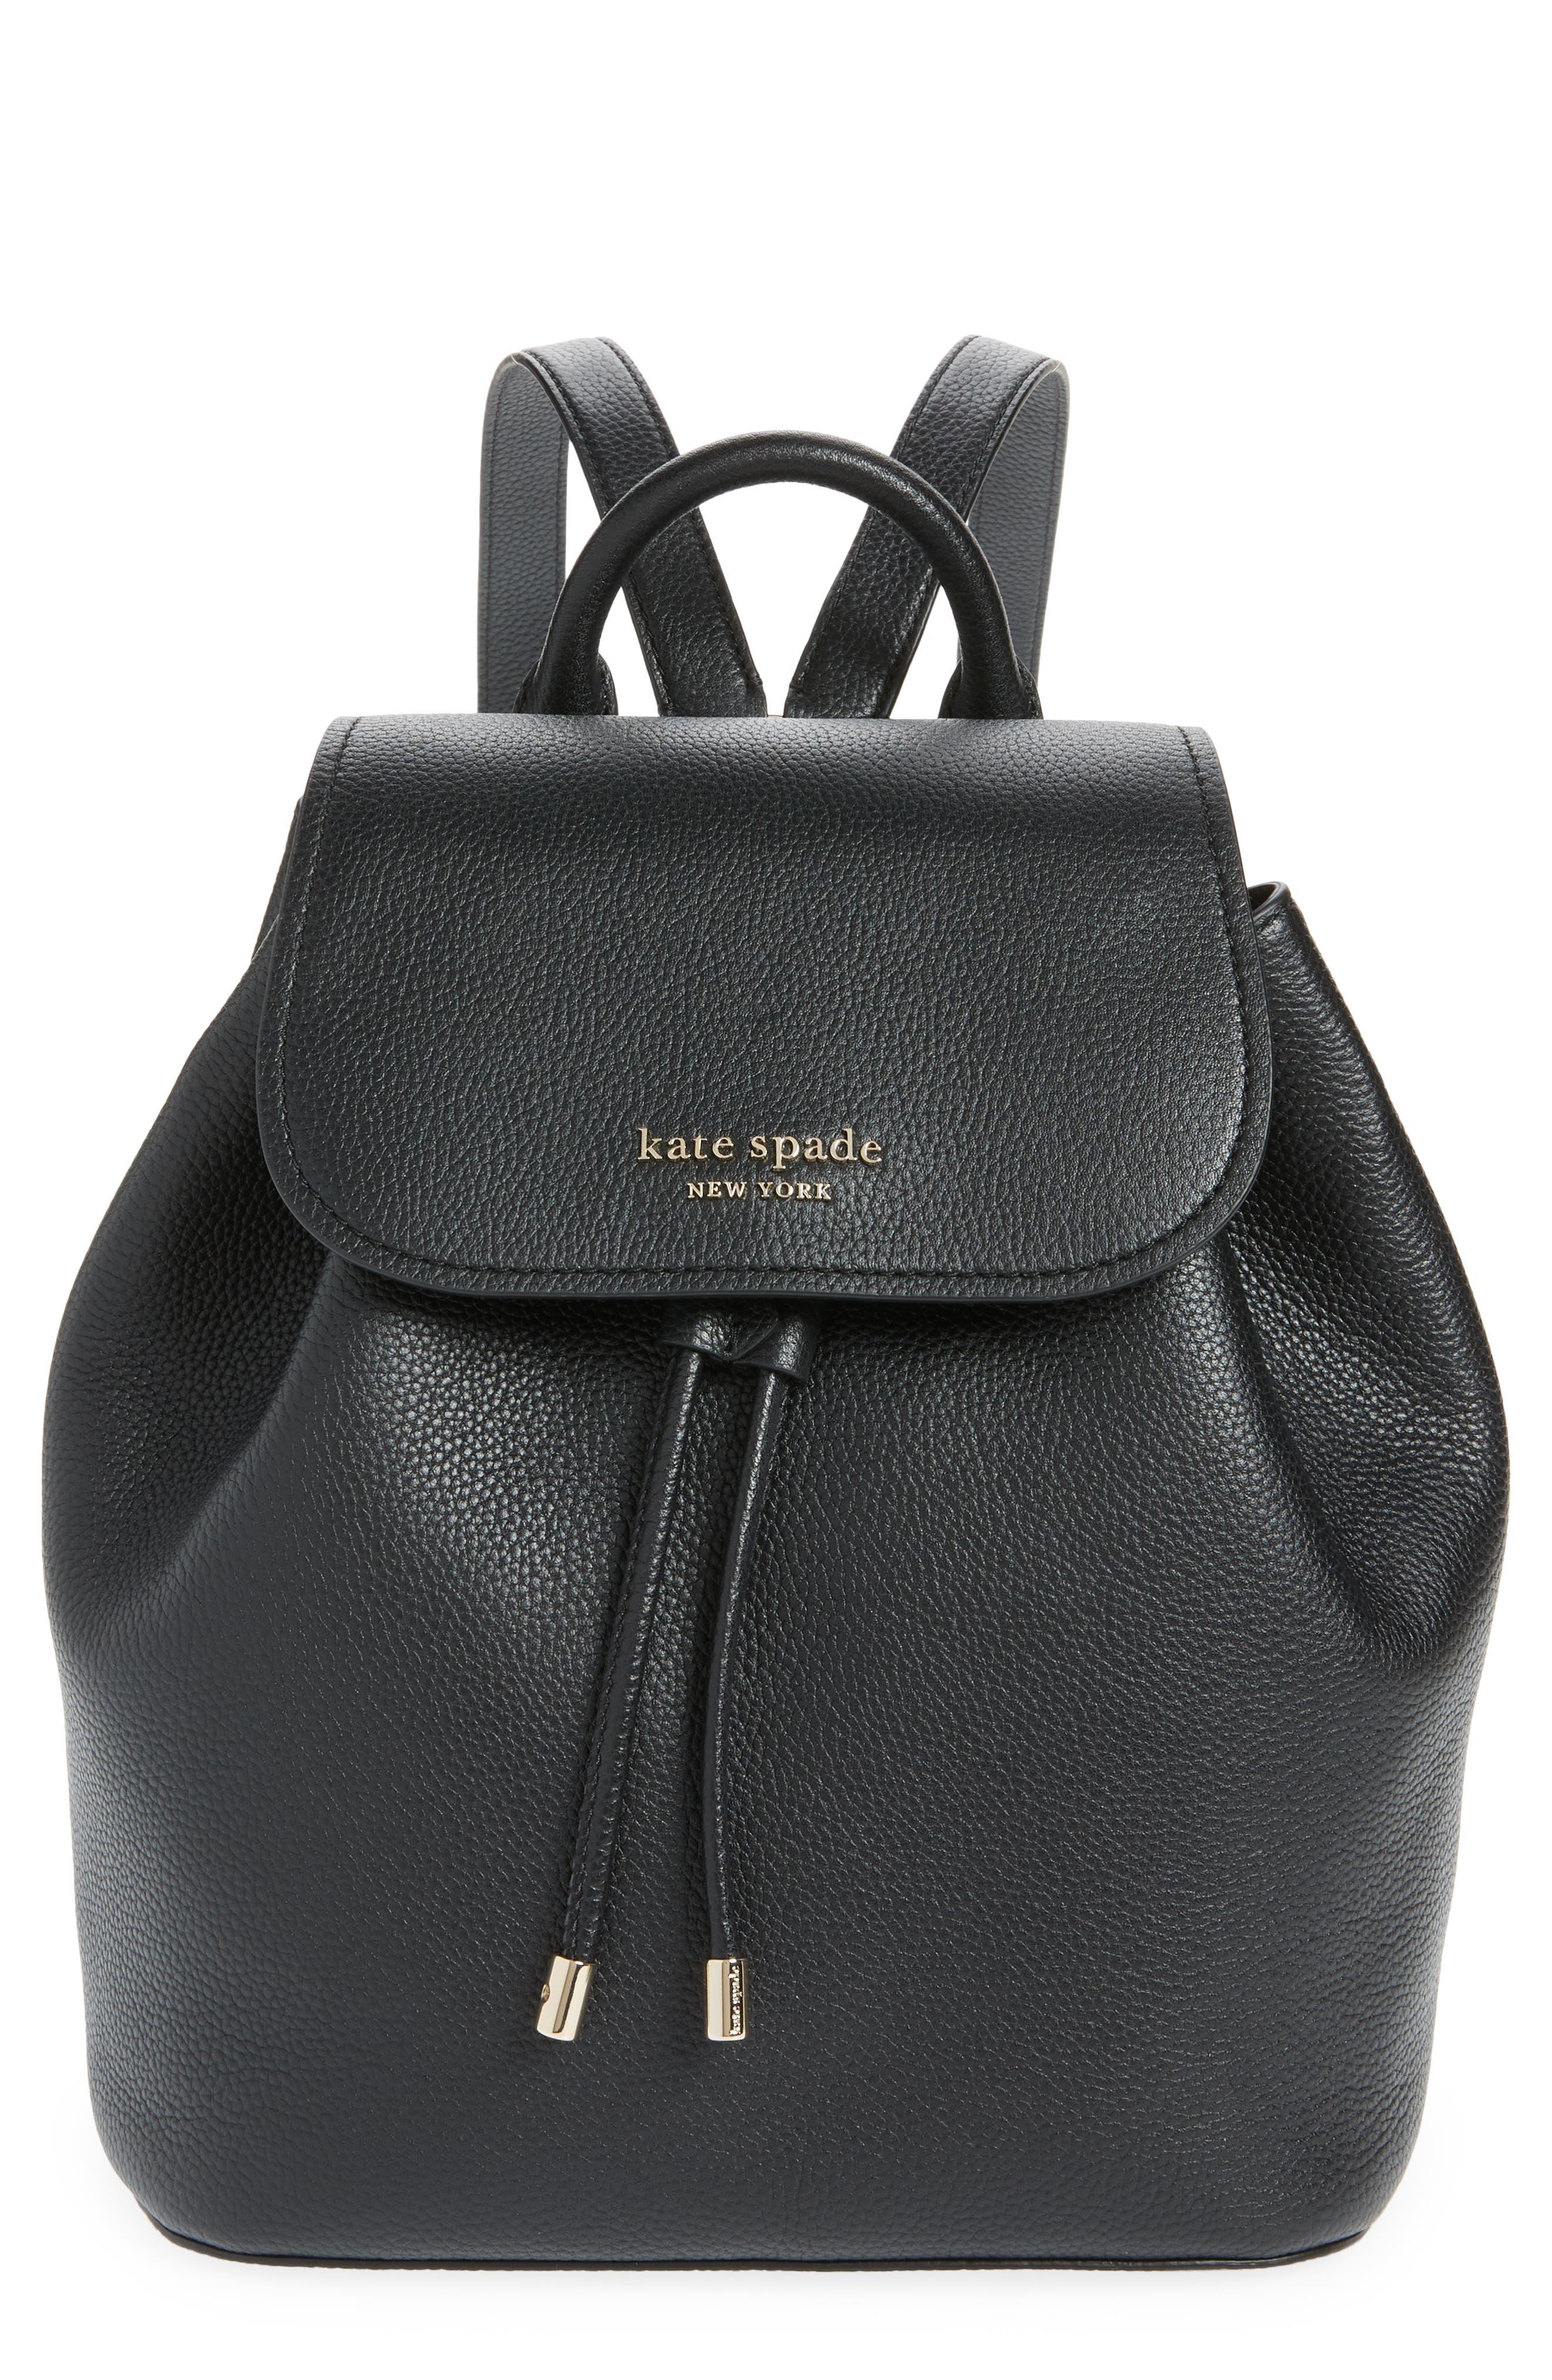 Kate Spade Sinch Pebbled Leather Medium Flap Backpack in Black | Lyst